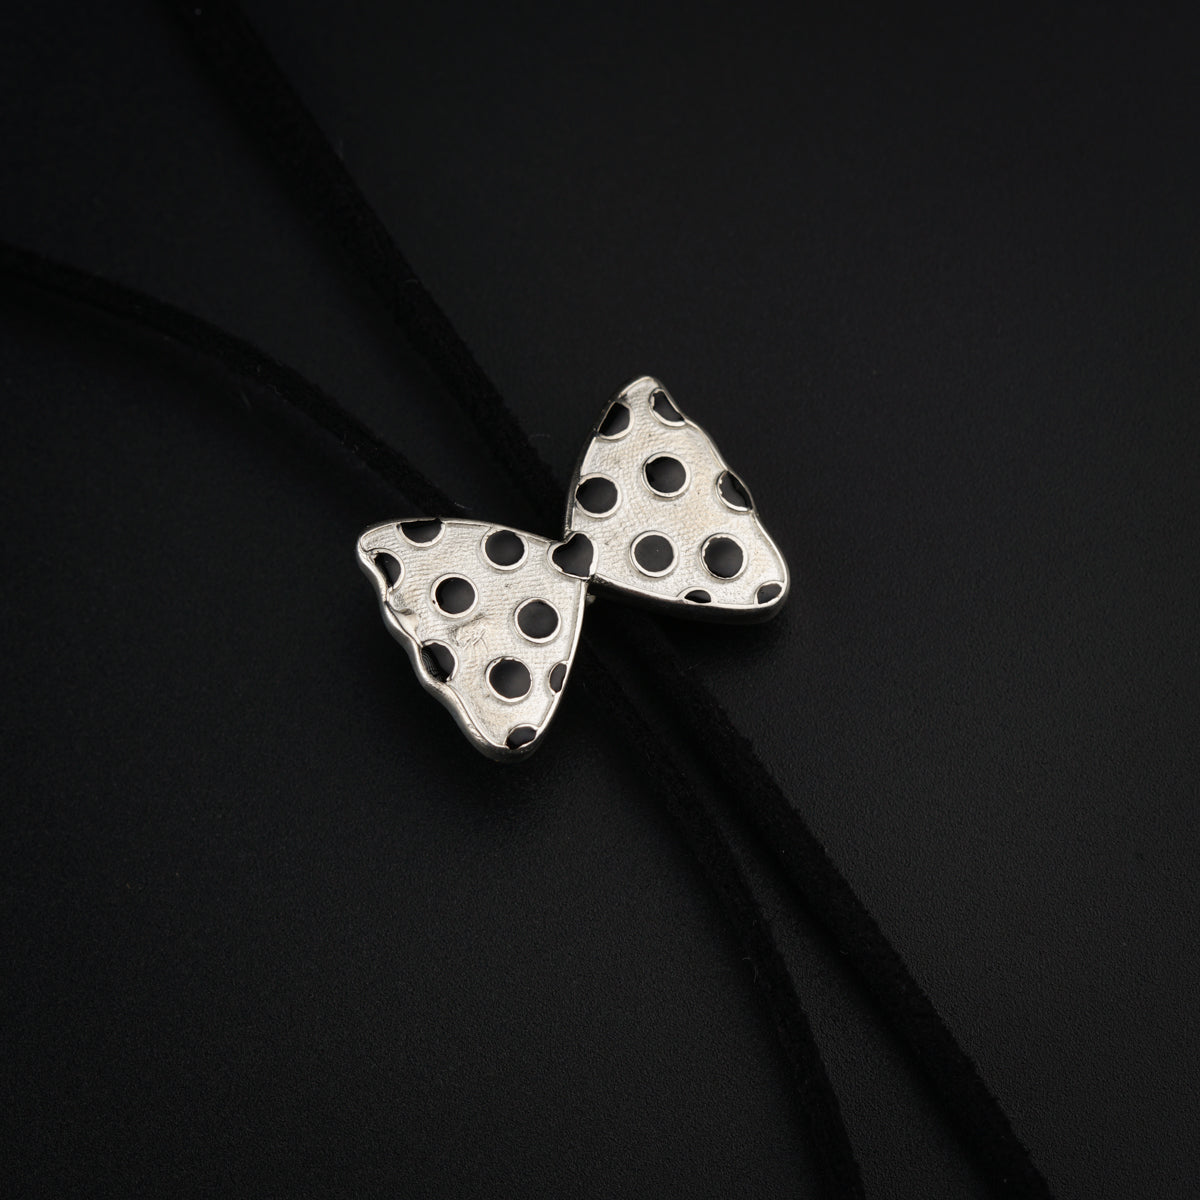 a pair of black and white polka dot earrings